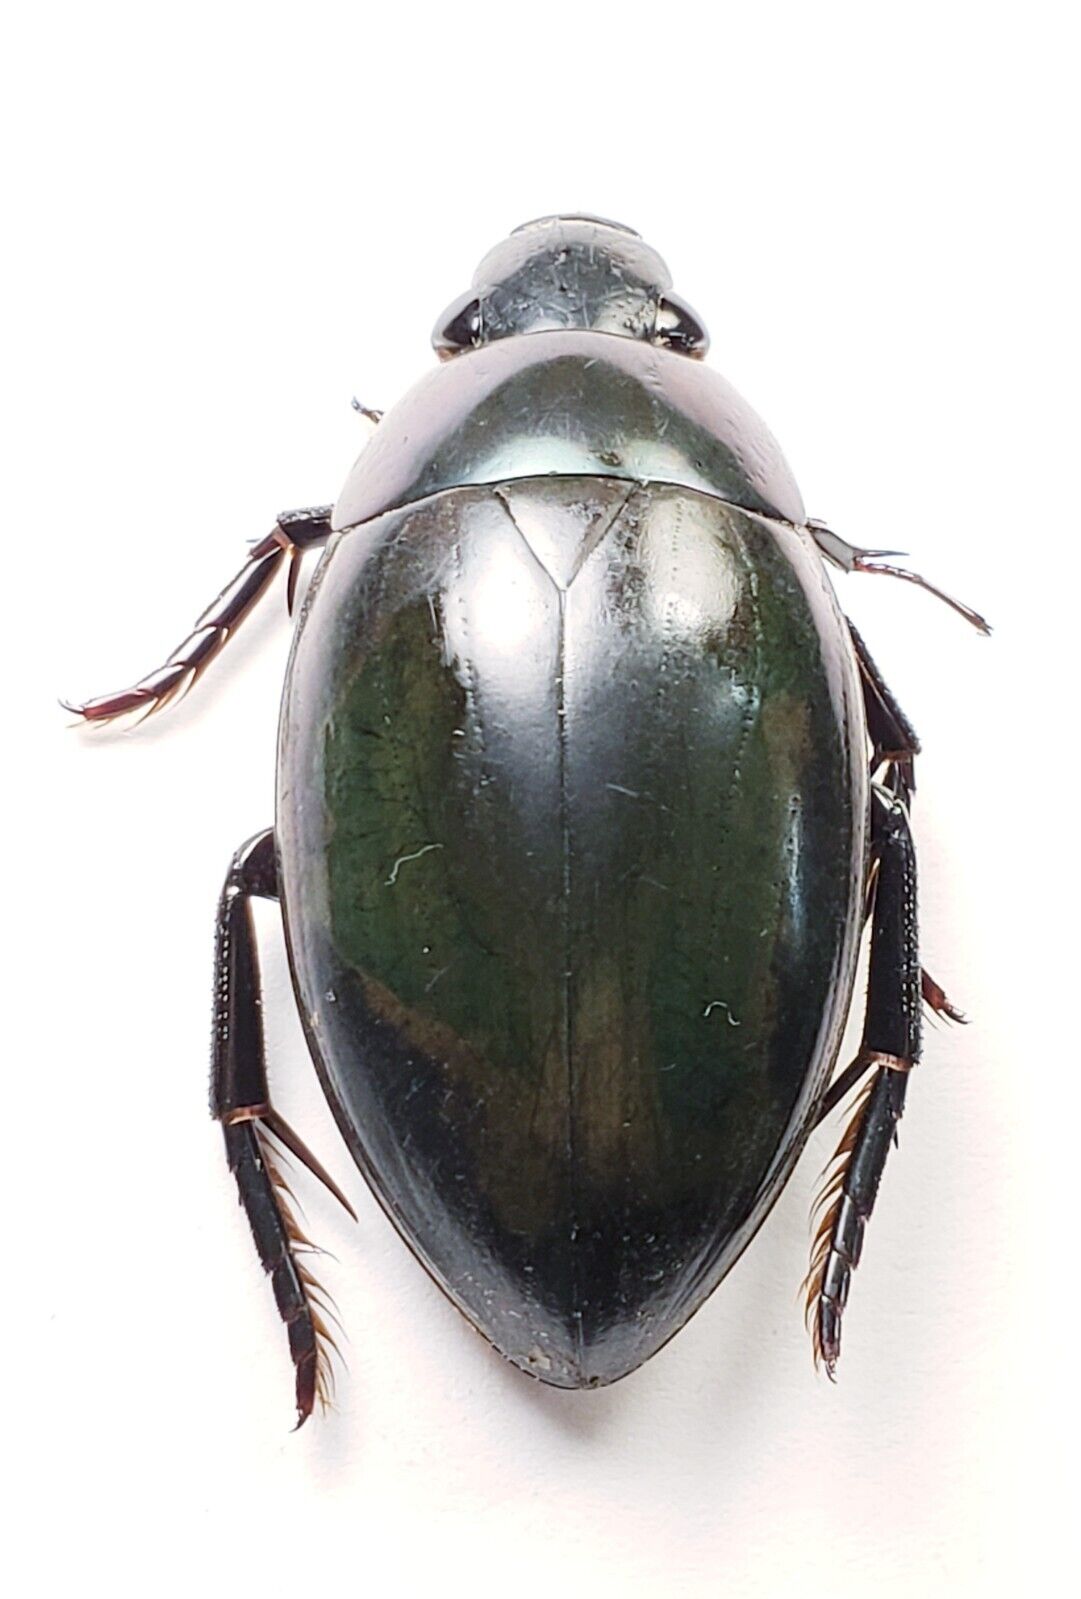 Huge Water Beetle: Hydrophilus ovatus (Hydrophilidae) USA Coleoptera